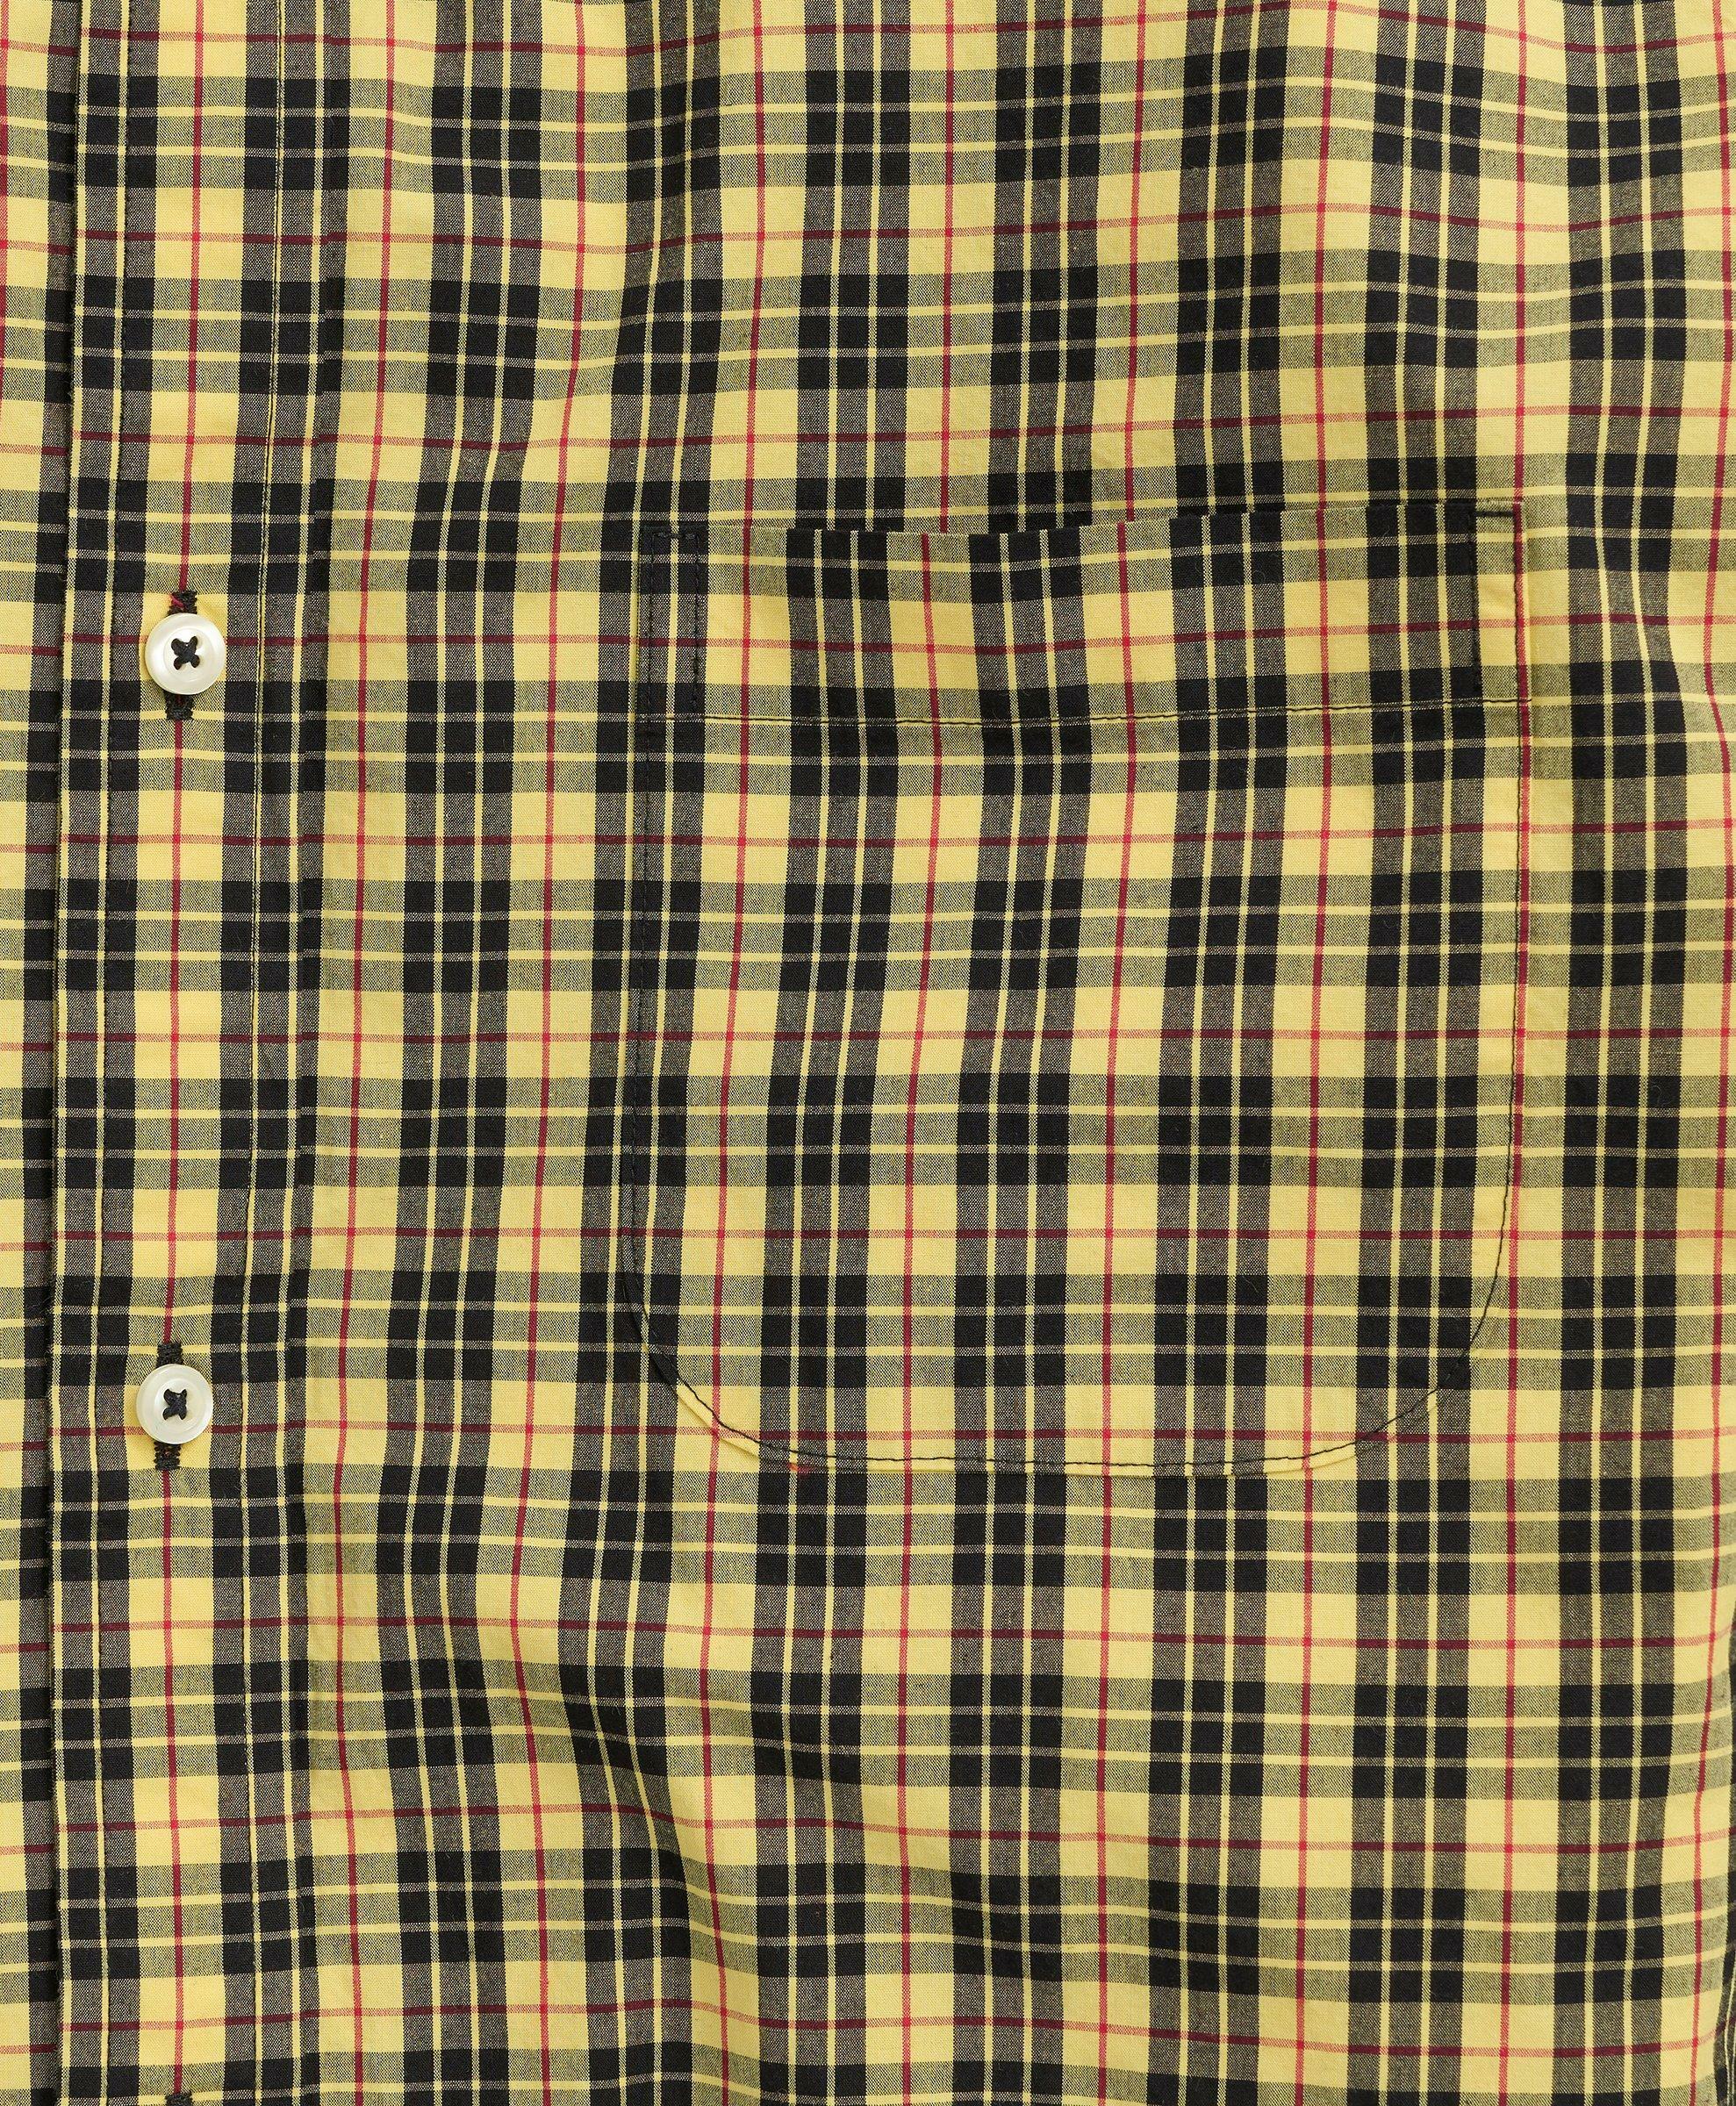 Brooks Brothers Men's Friday Shirt, Poplin Yellow Tartan